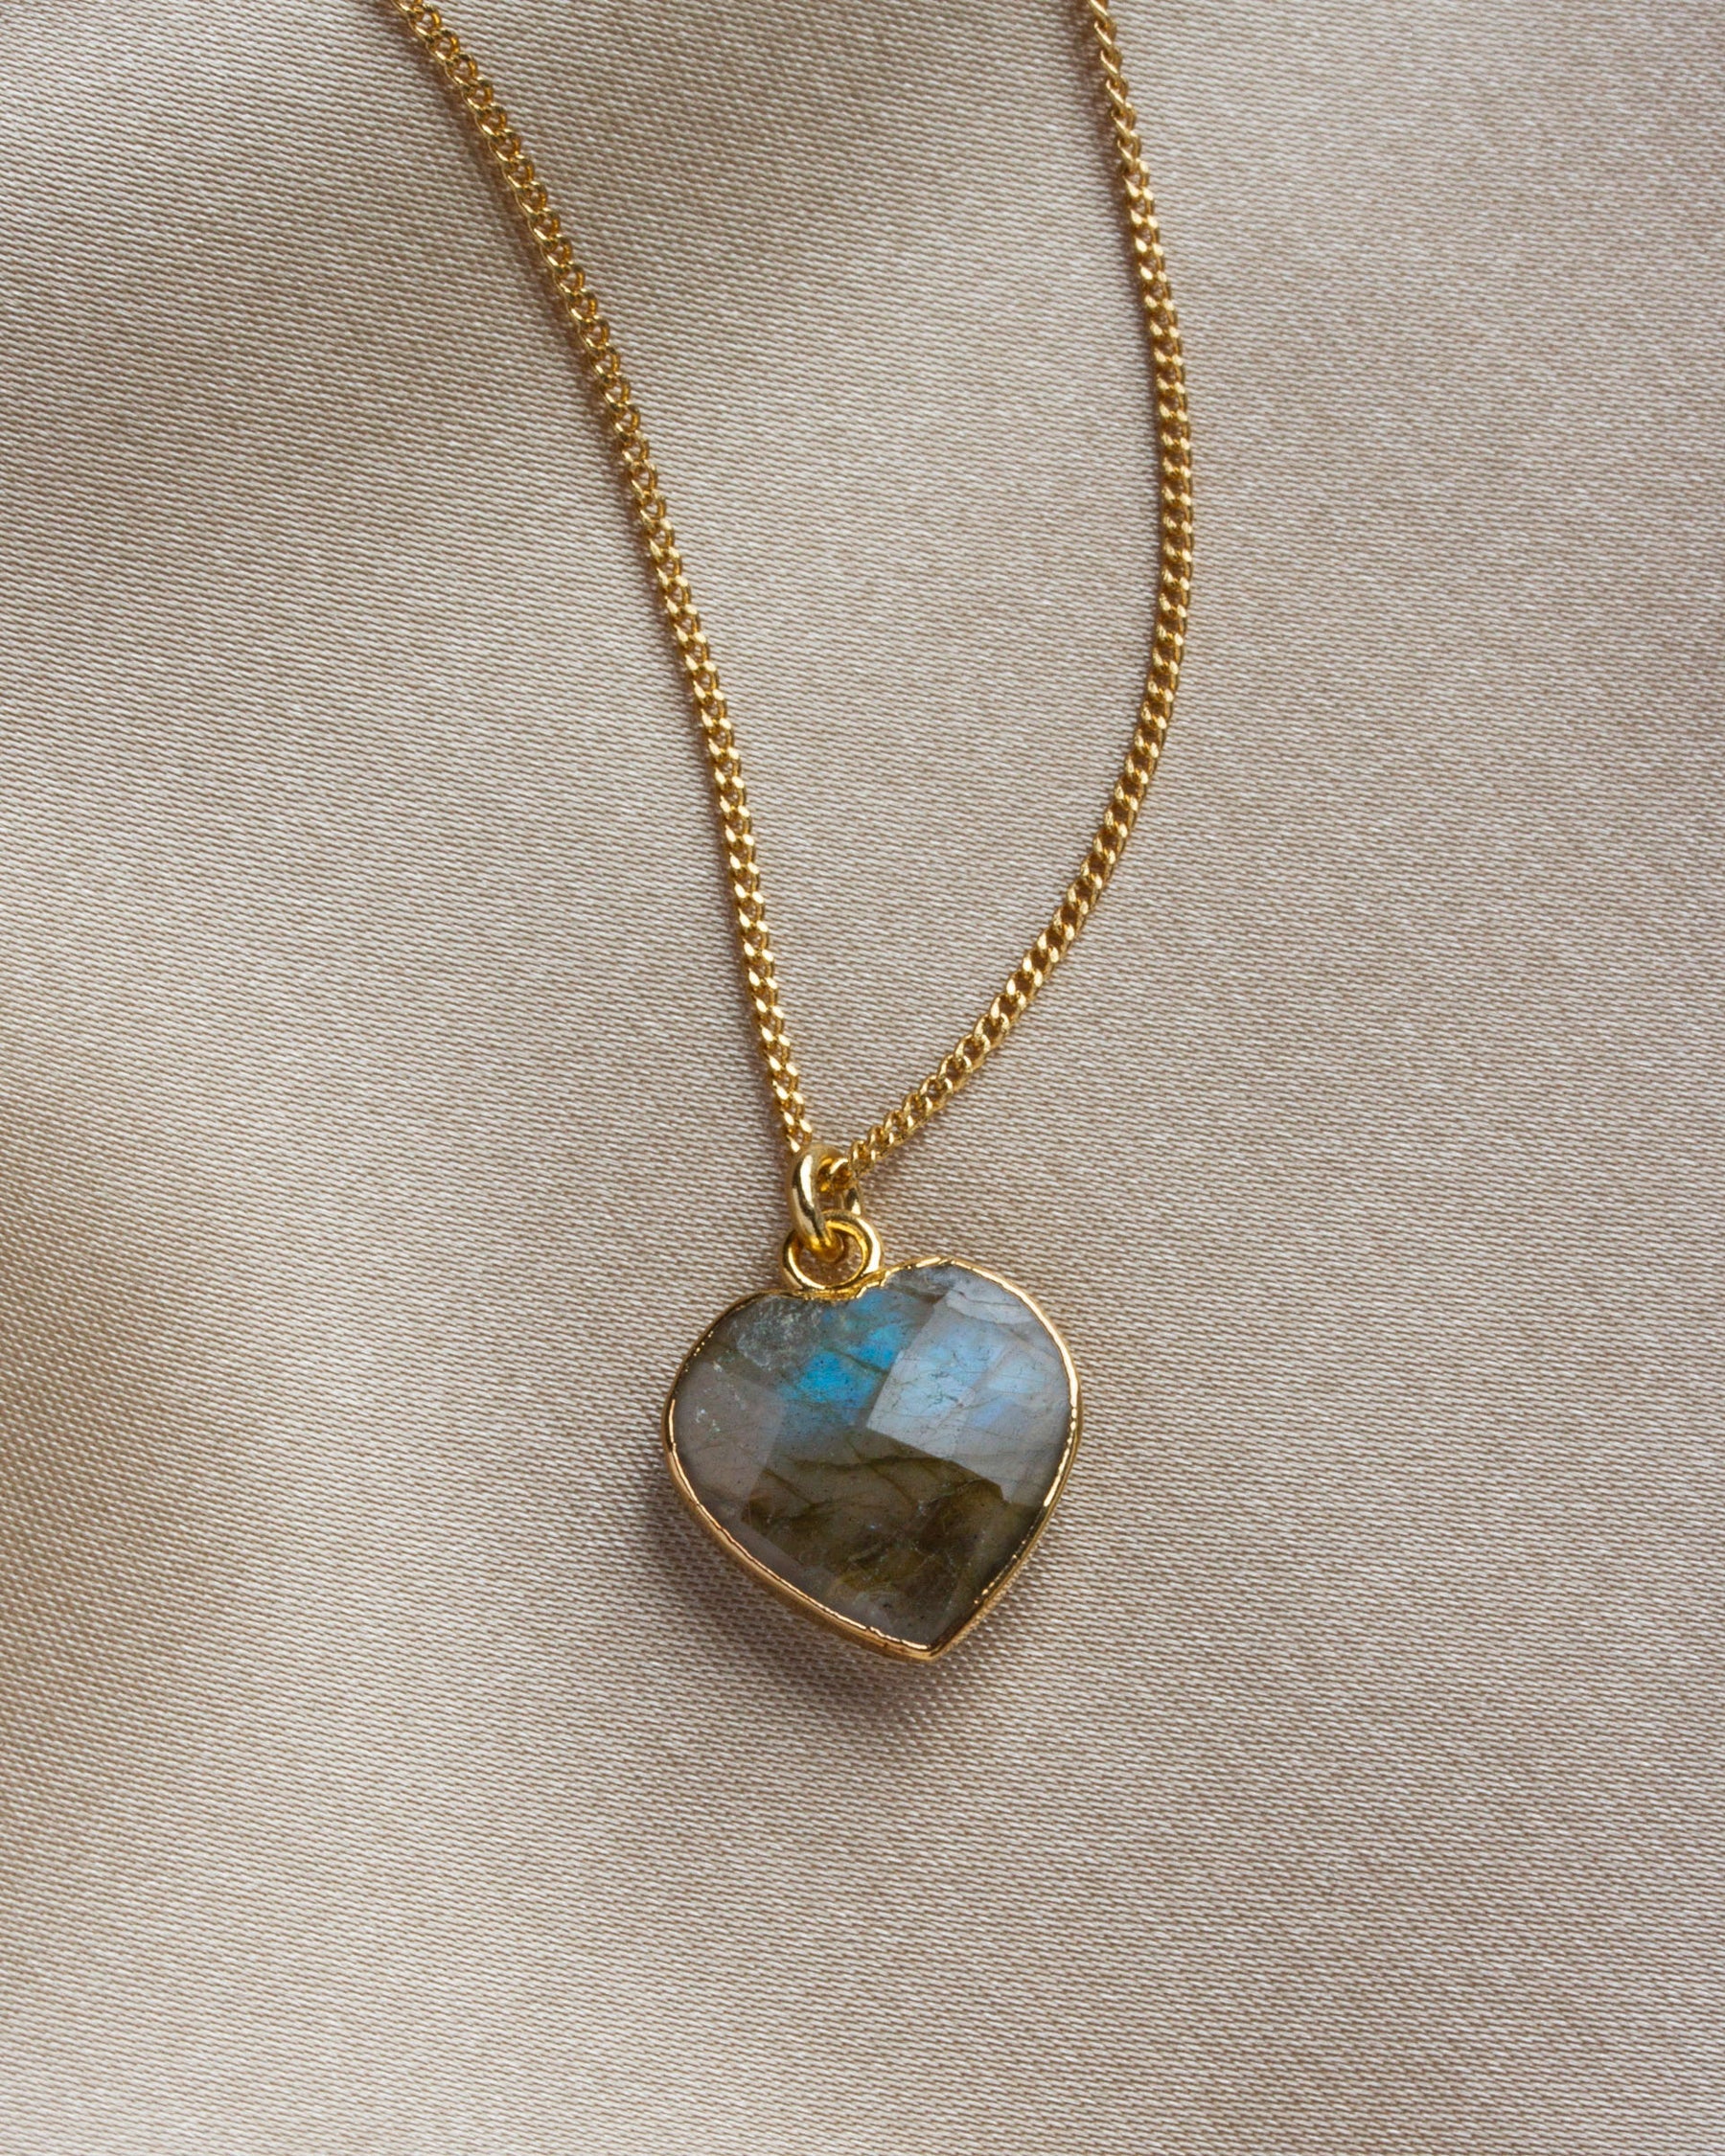 Luna Norte "Conversation Heart" Necklace.